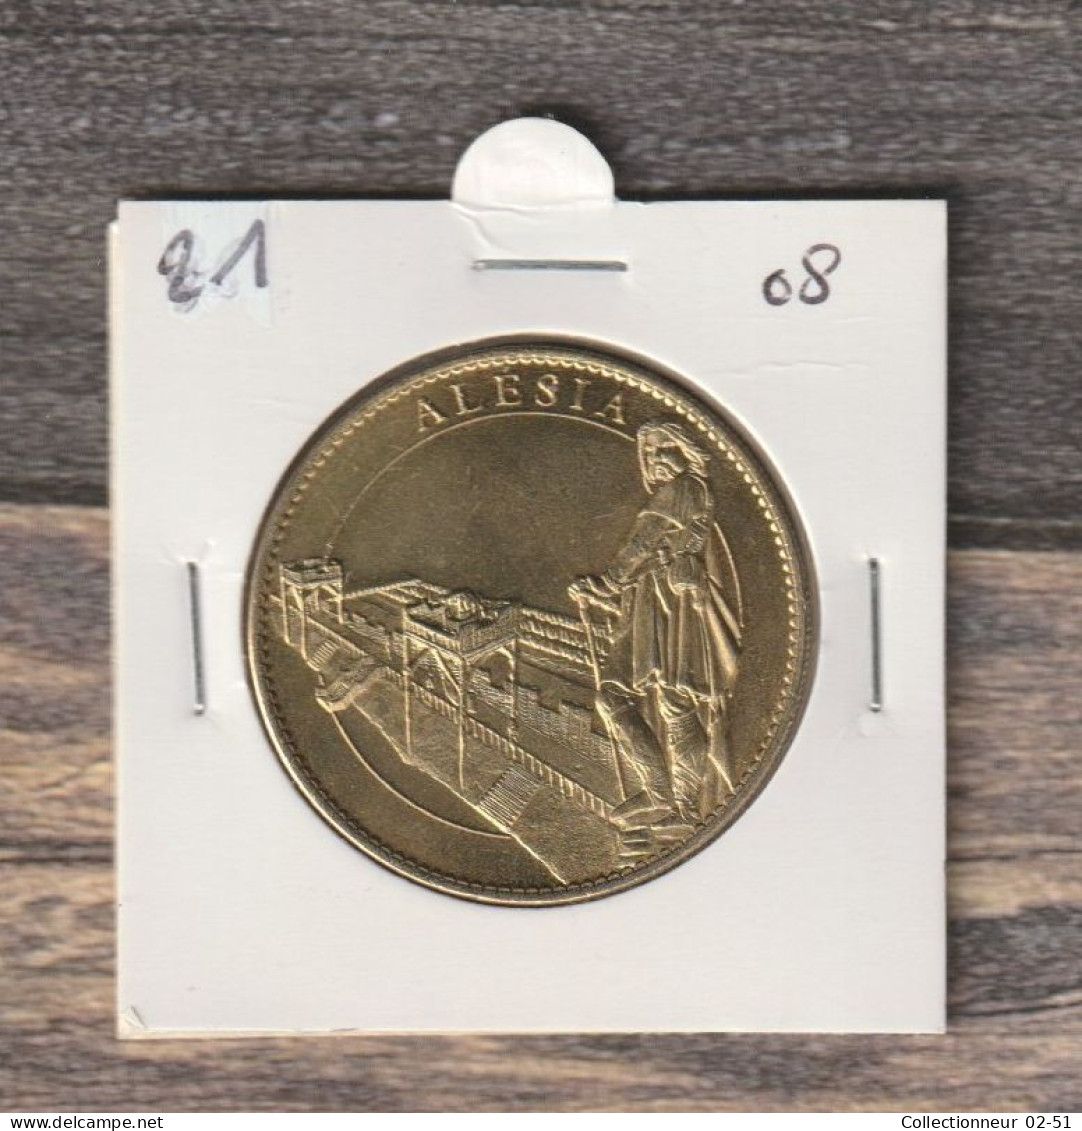 Monnaie Arthus Bertrand : Alésia - 2008 - 2008